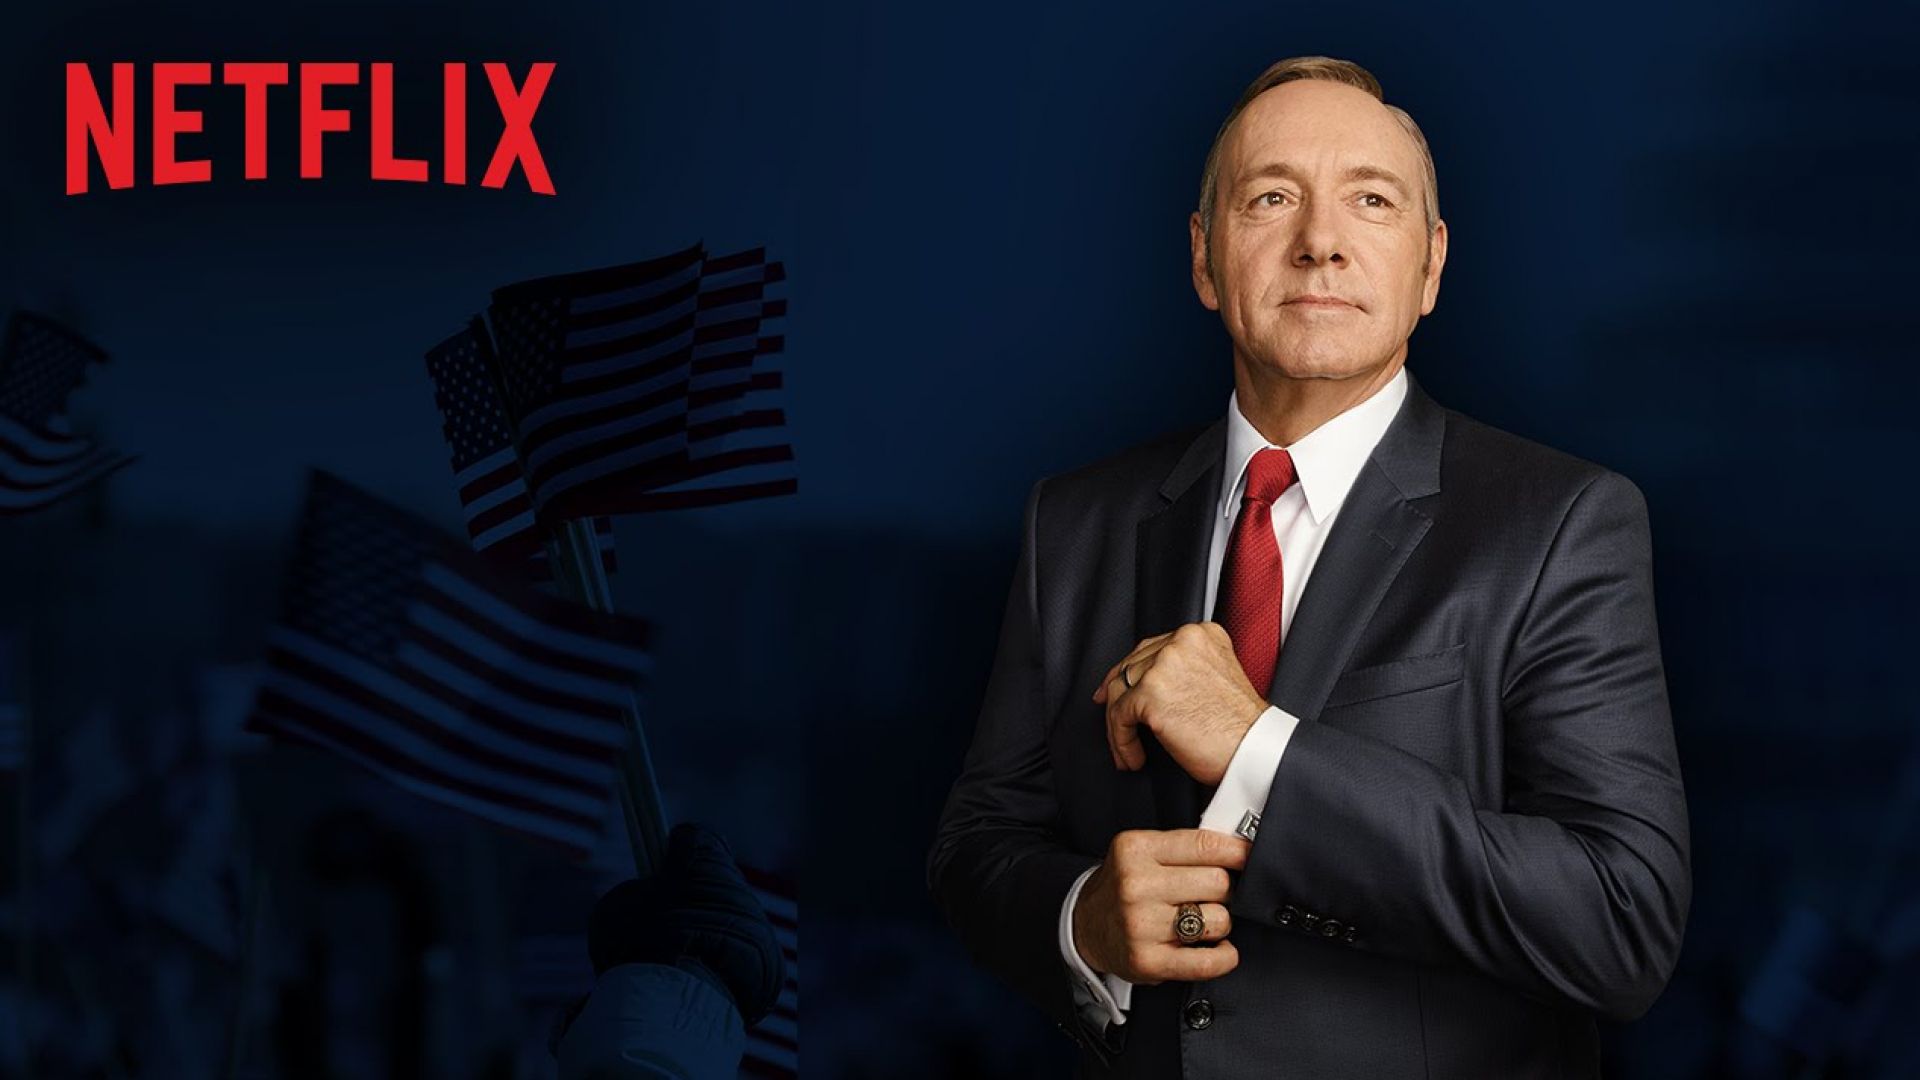 Netflix brilliantly teases House of Cards Season 4 during GO